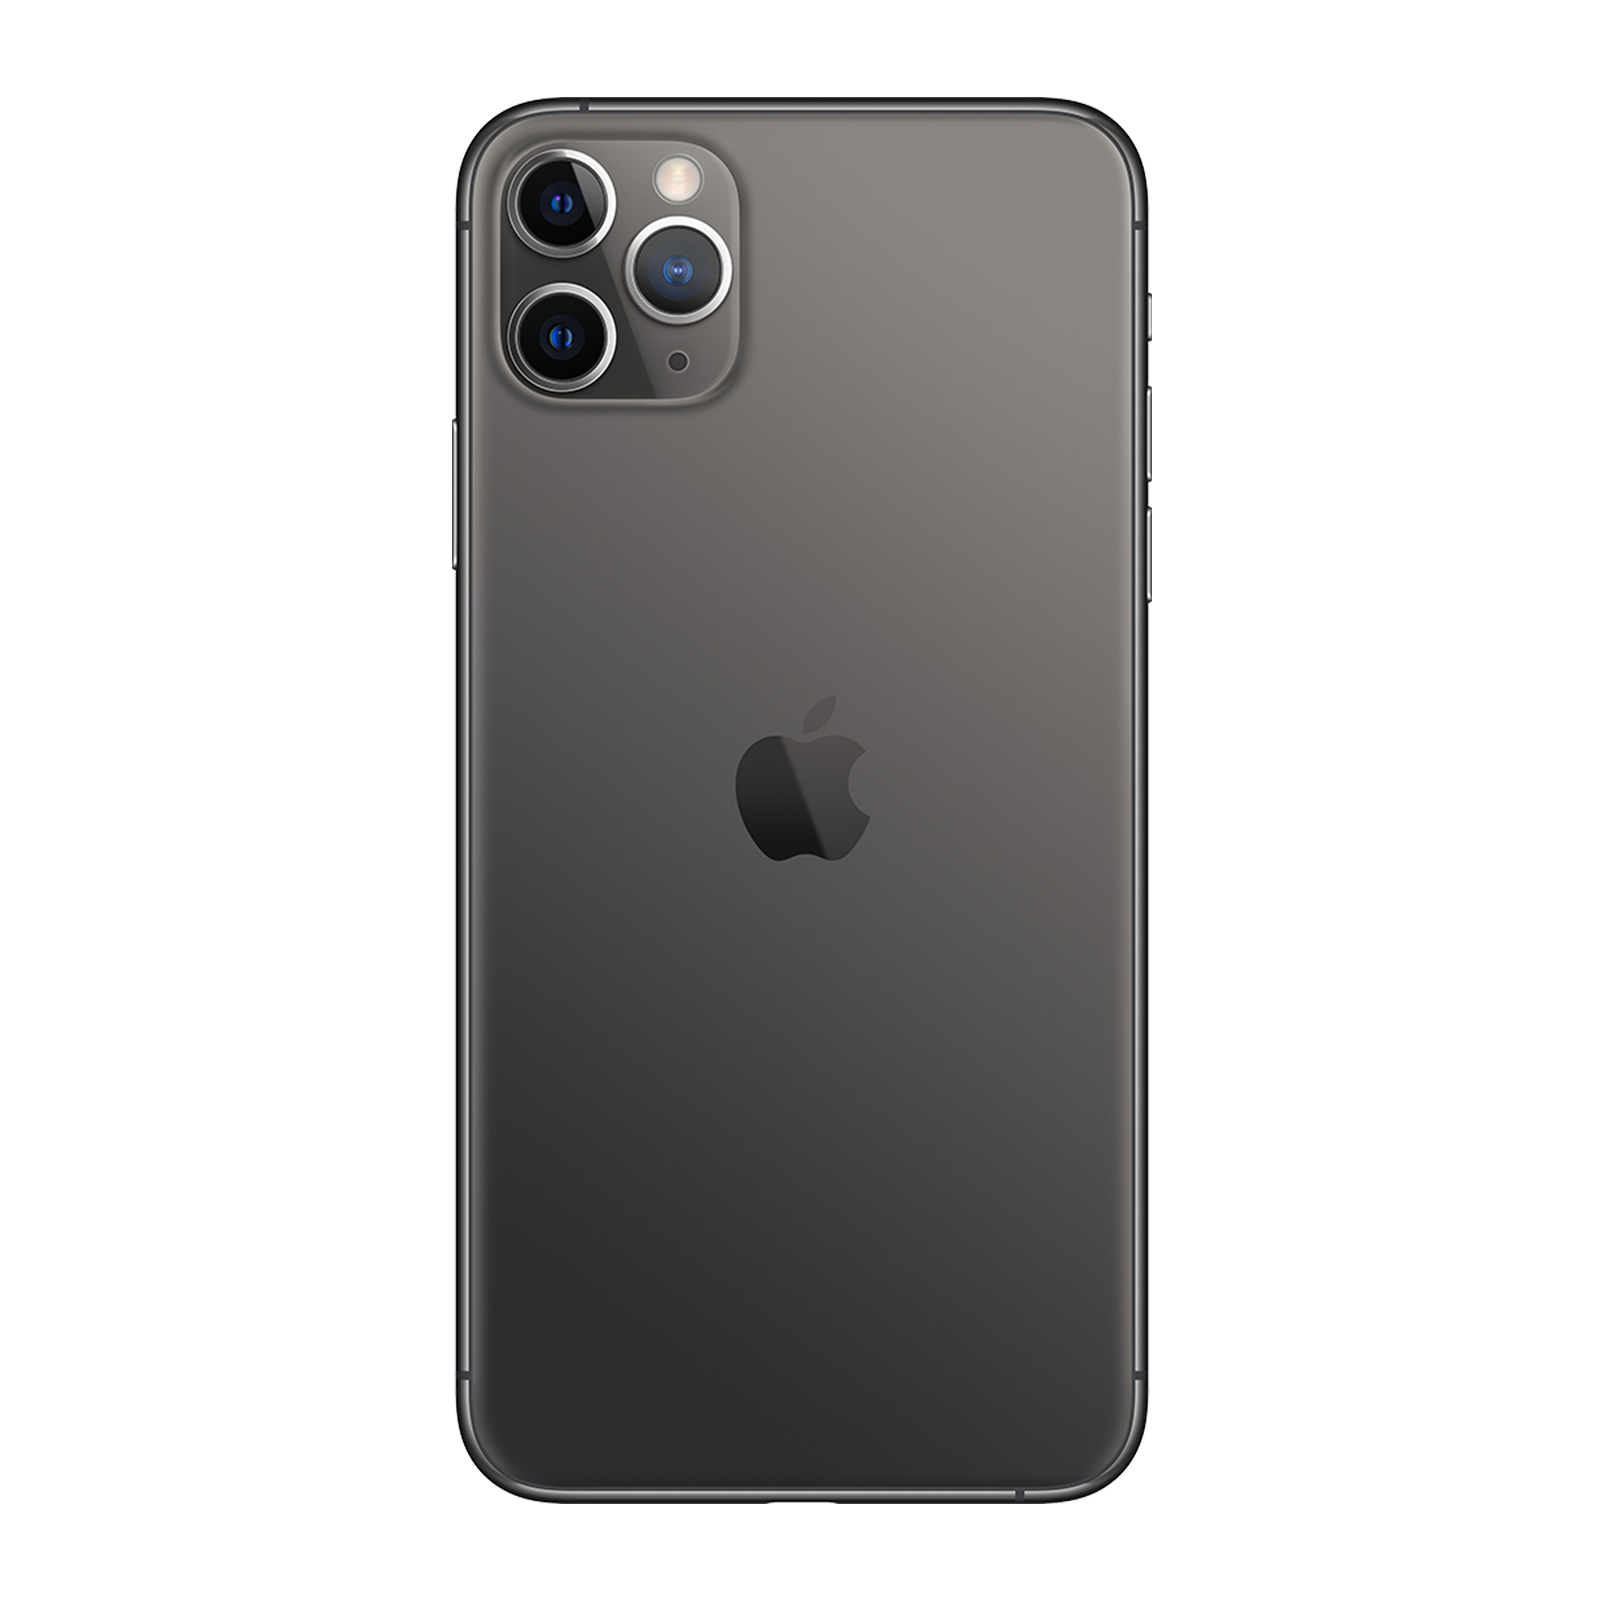 Apple iPhone 11 Pro Max 256GB Space Grey Pristine - T-Mobile